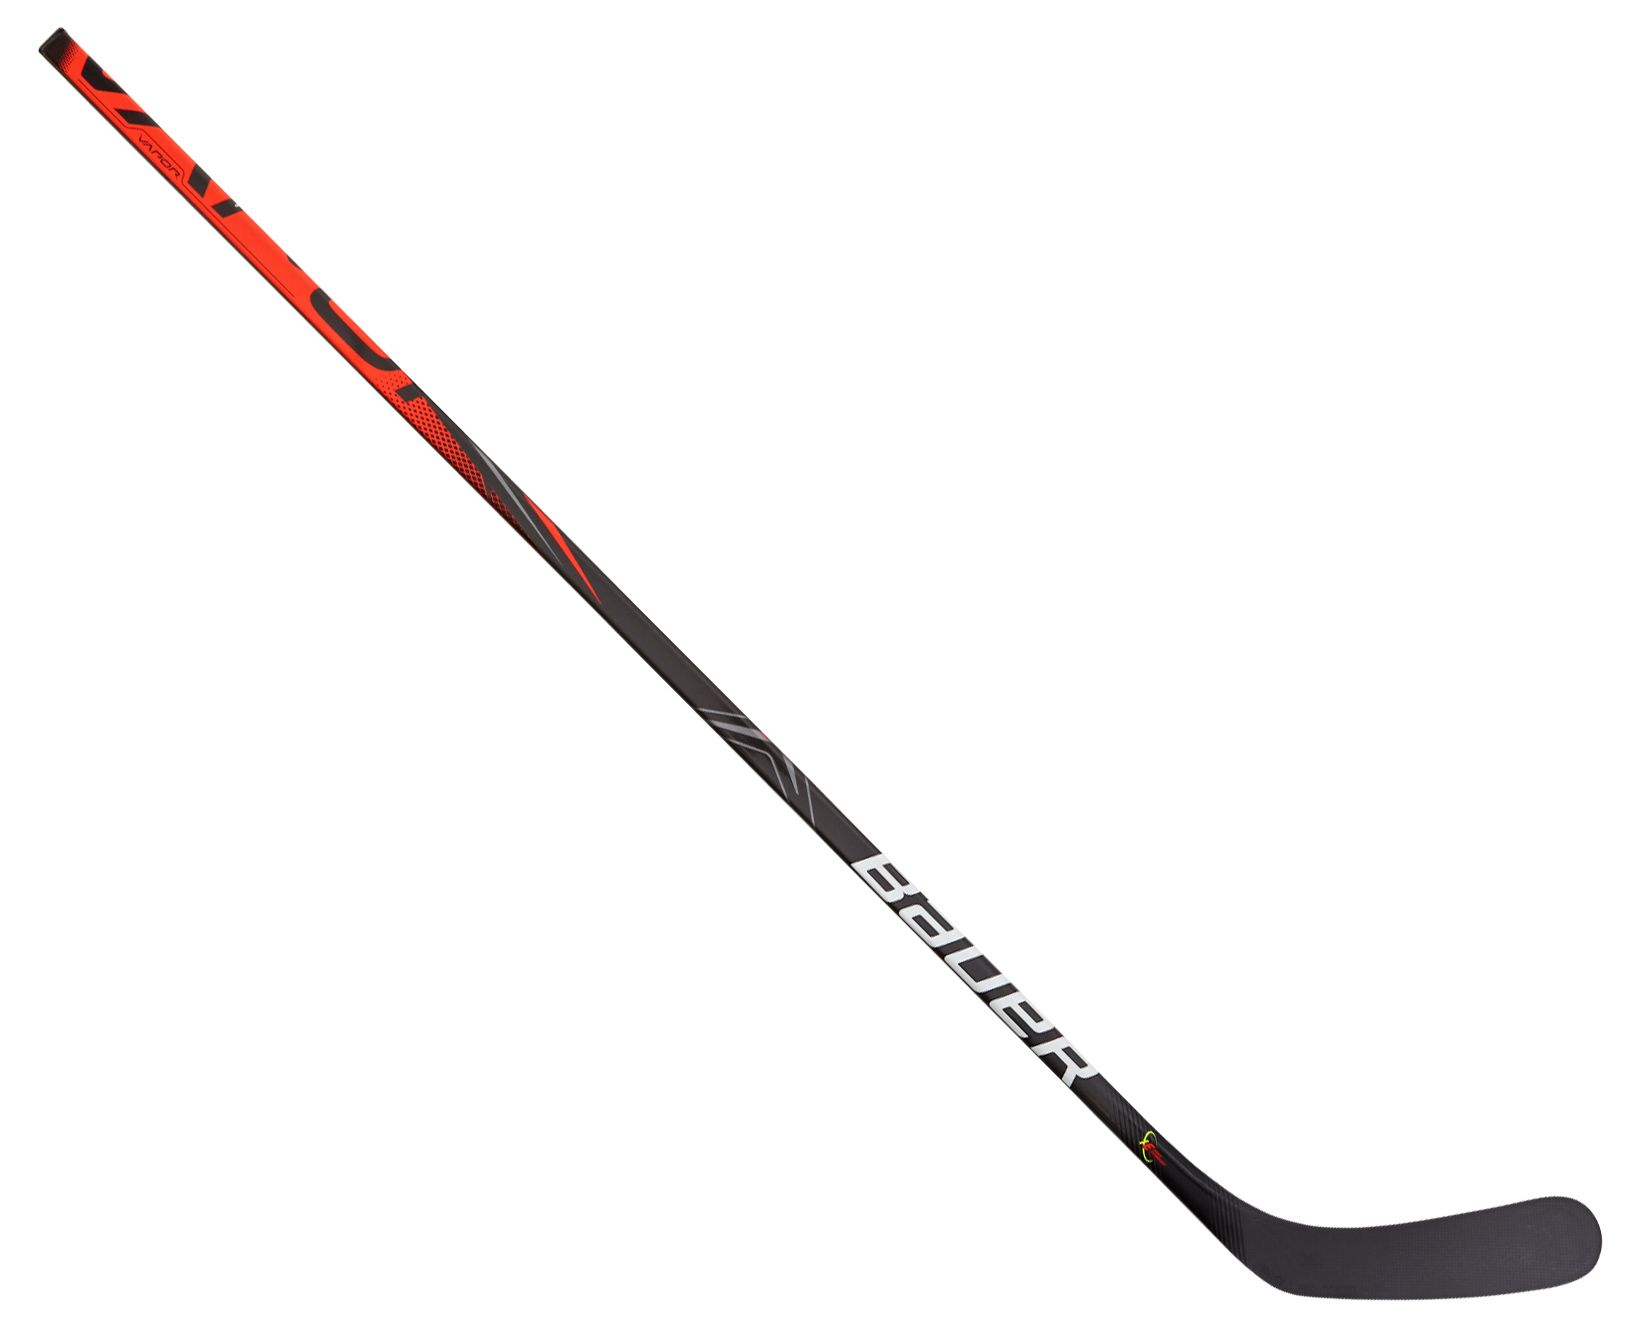 Bauer Vapor 2X Team Grip Ice Hockey Stick - Intermediate